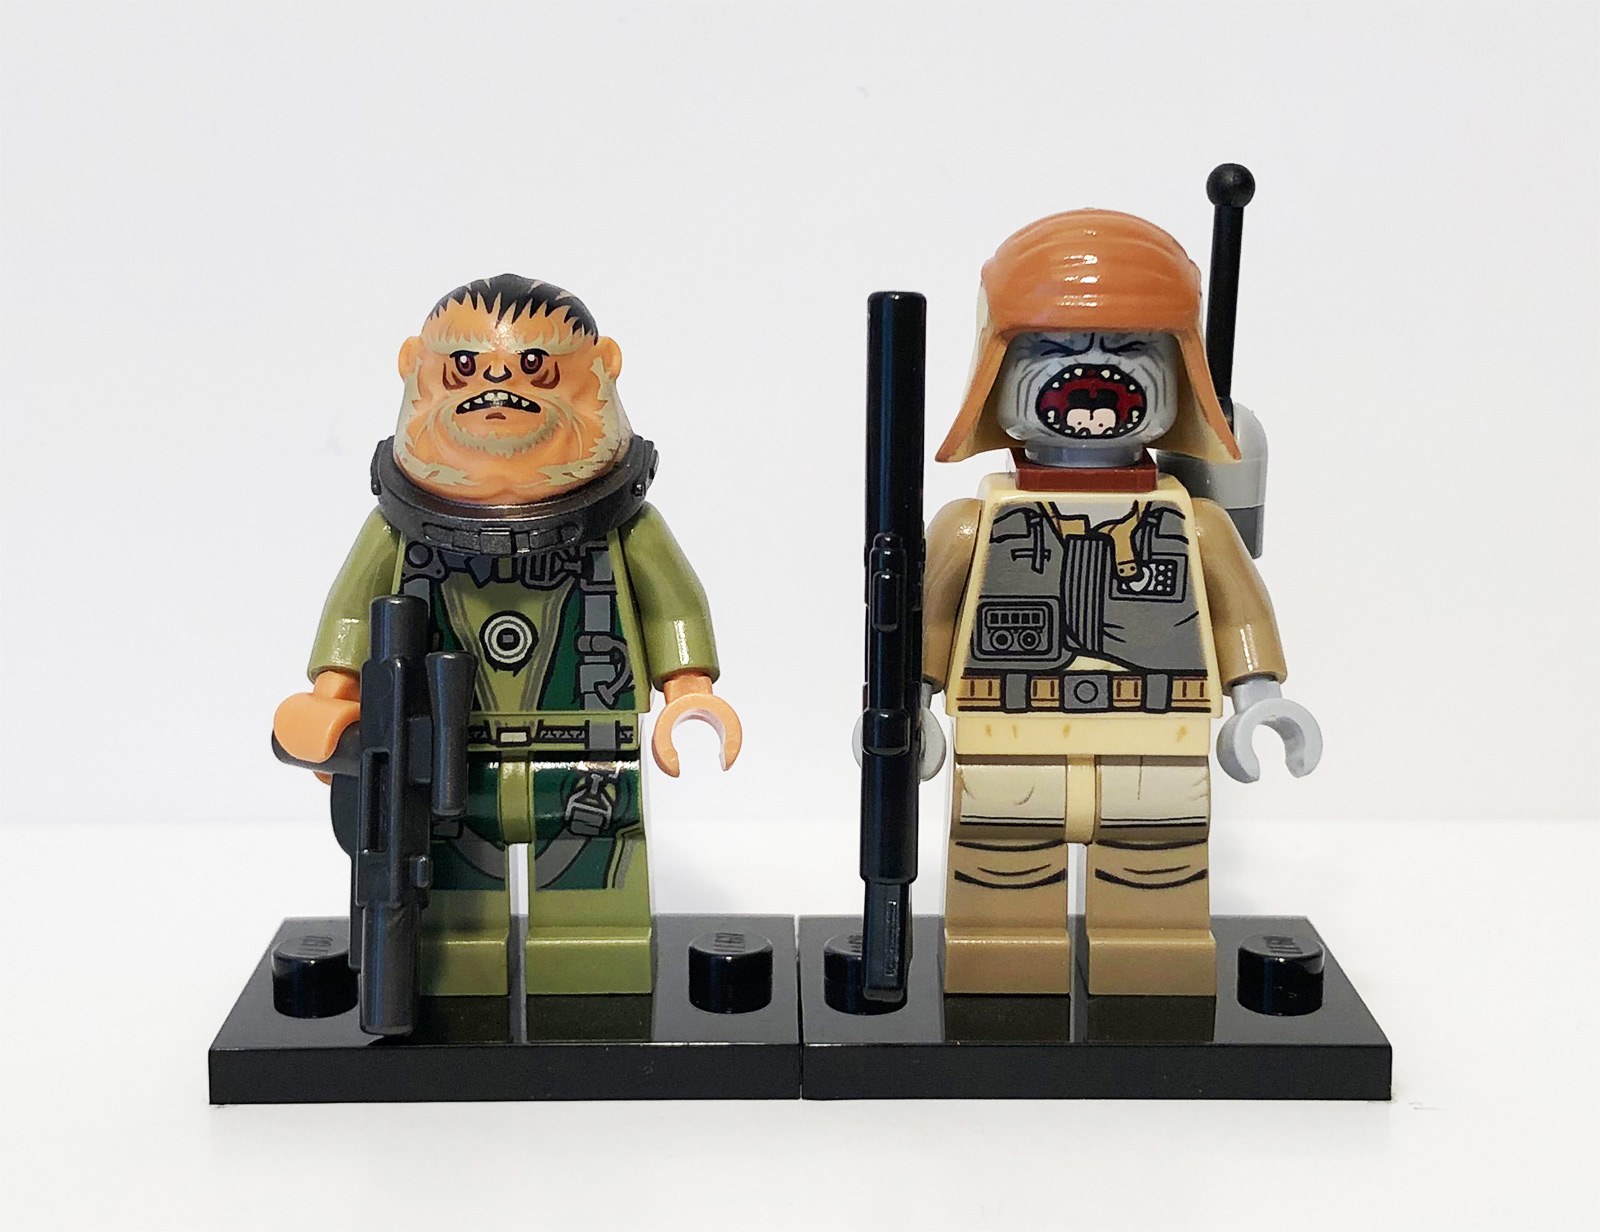 LEGO STAR WARS CANTINA ALIEN BUG BOUNTY HUNTER MINIFIGURE MADE OF GENUINE LEGO 